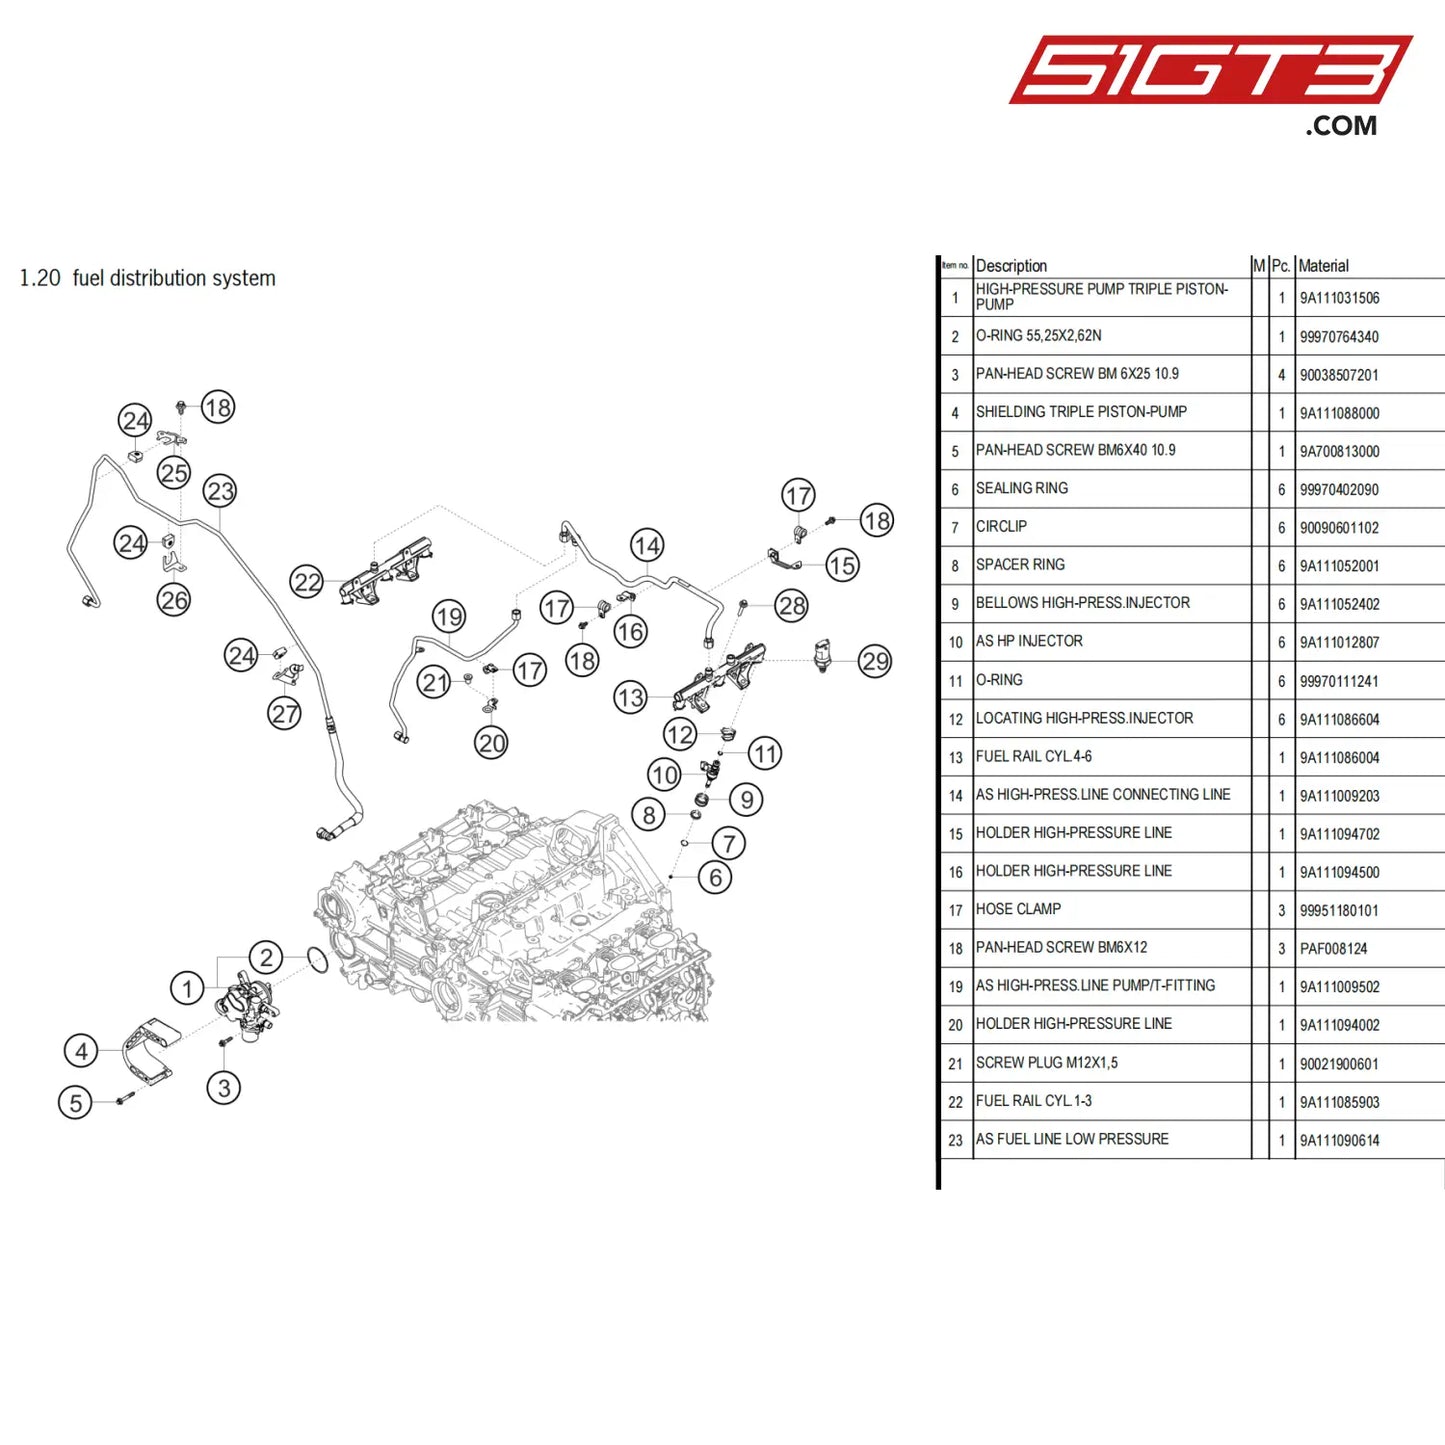 Holder High-Pressure Line - 9A111094500 [Porsche 718 Cayman Gt4 Clubsport] Fuel Distribution System